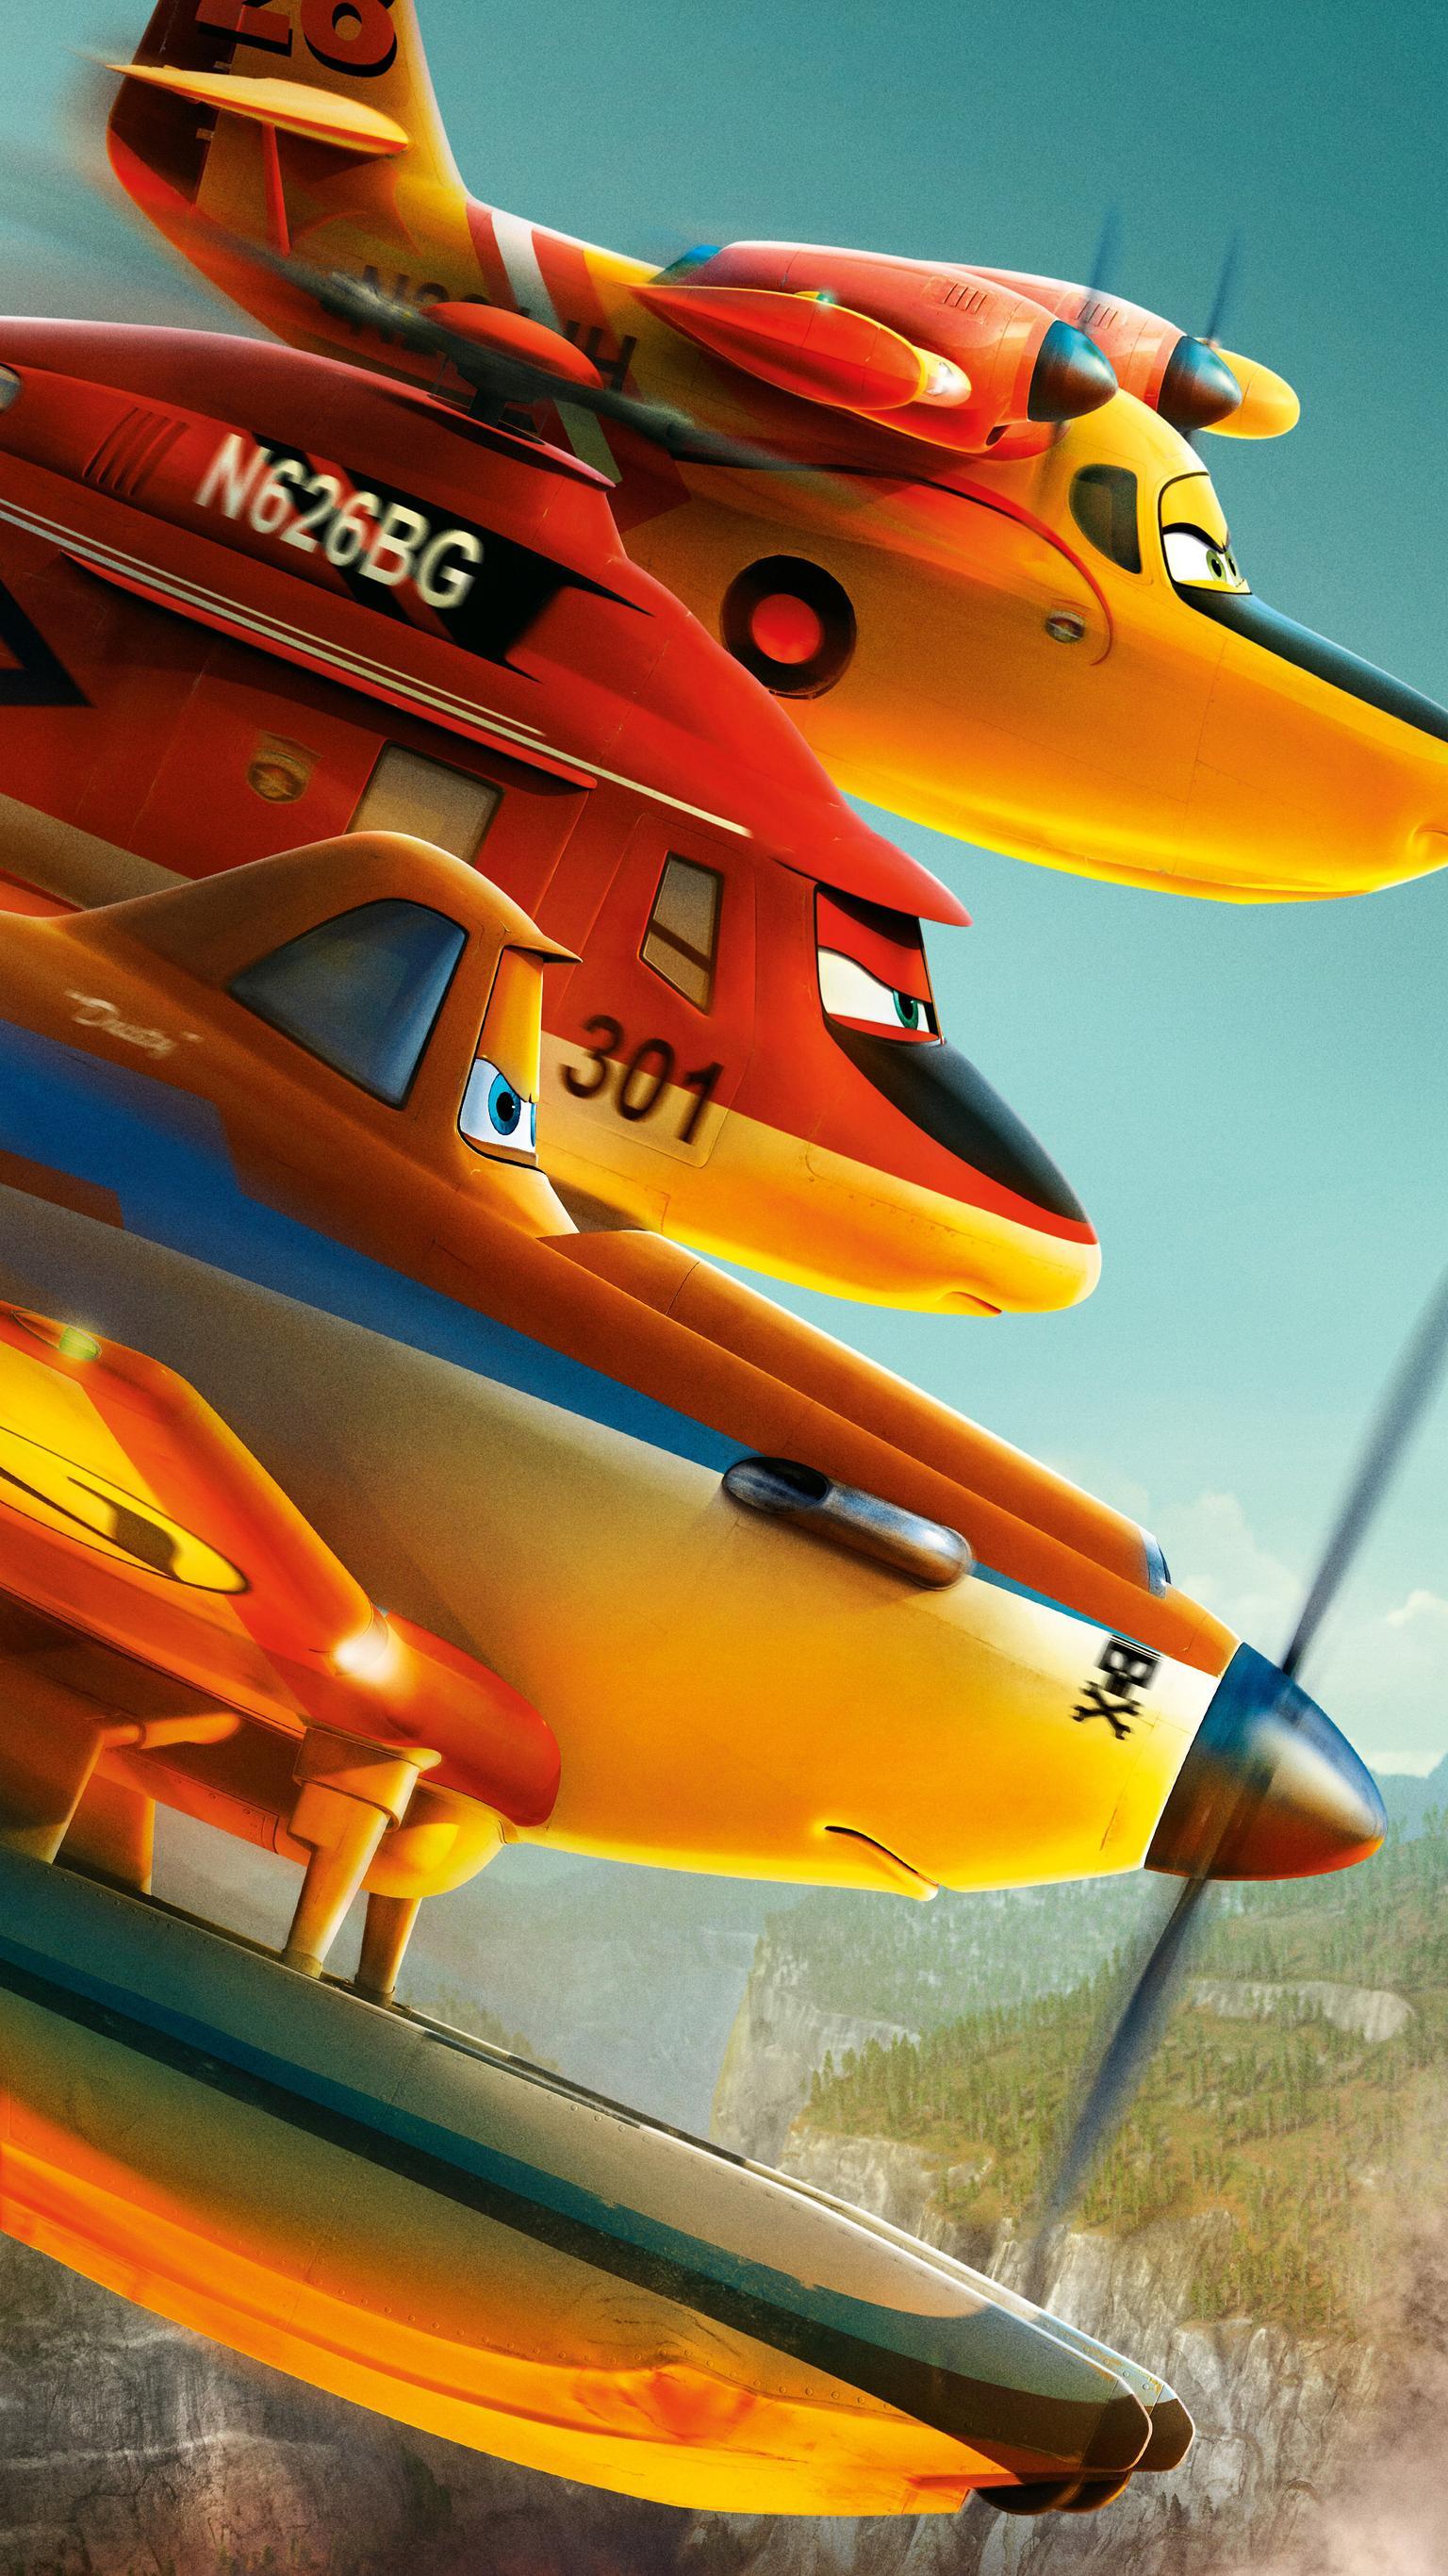 Planes: Fire & Rescue (2014) Phone Wallpaper